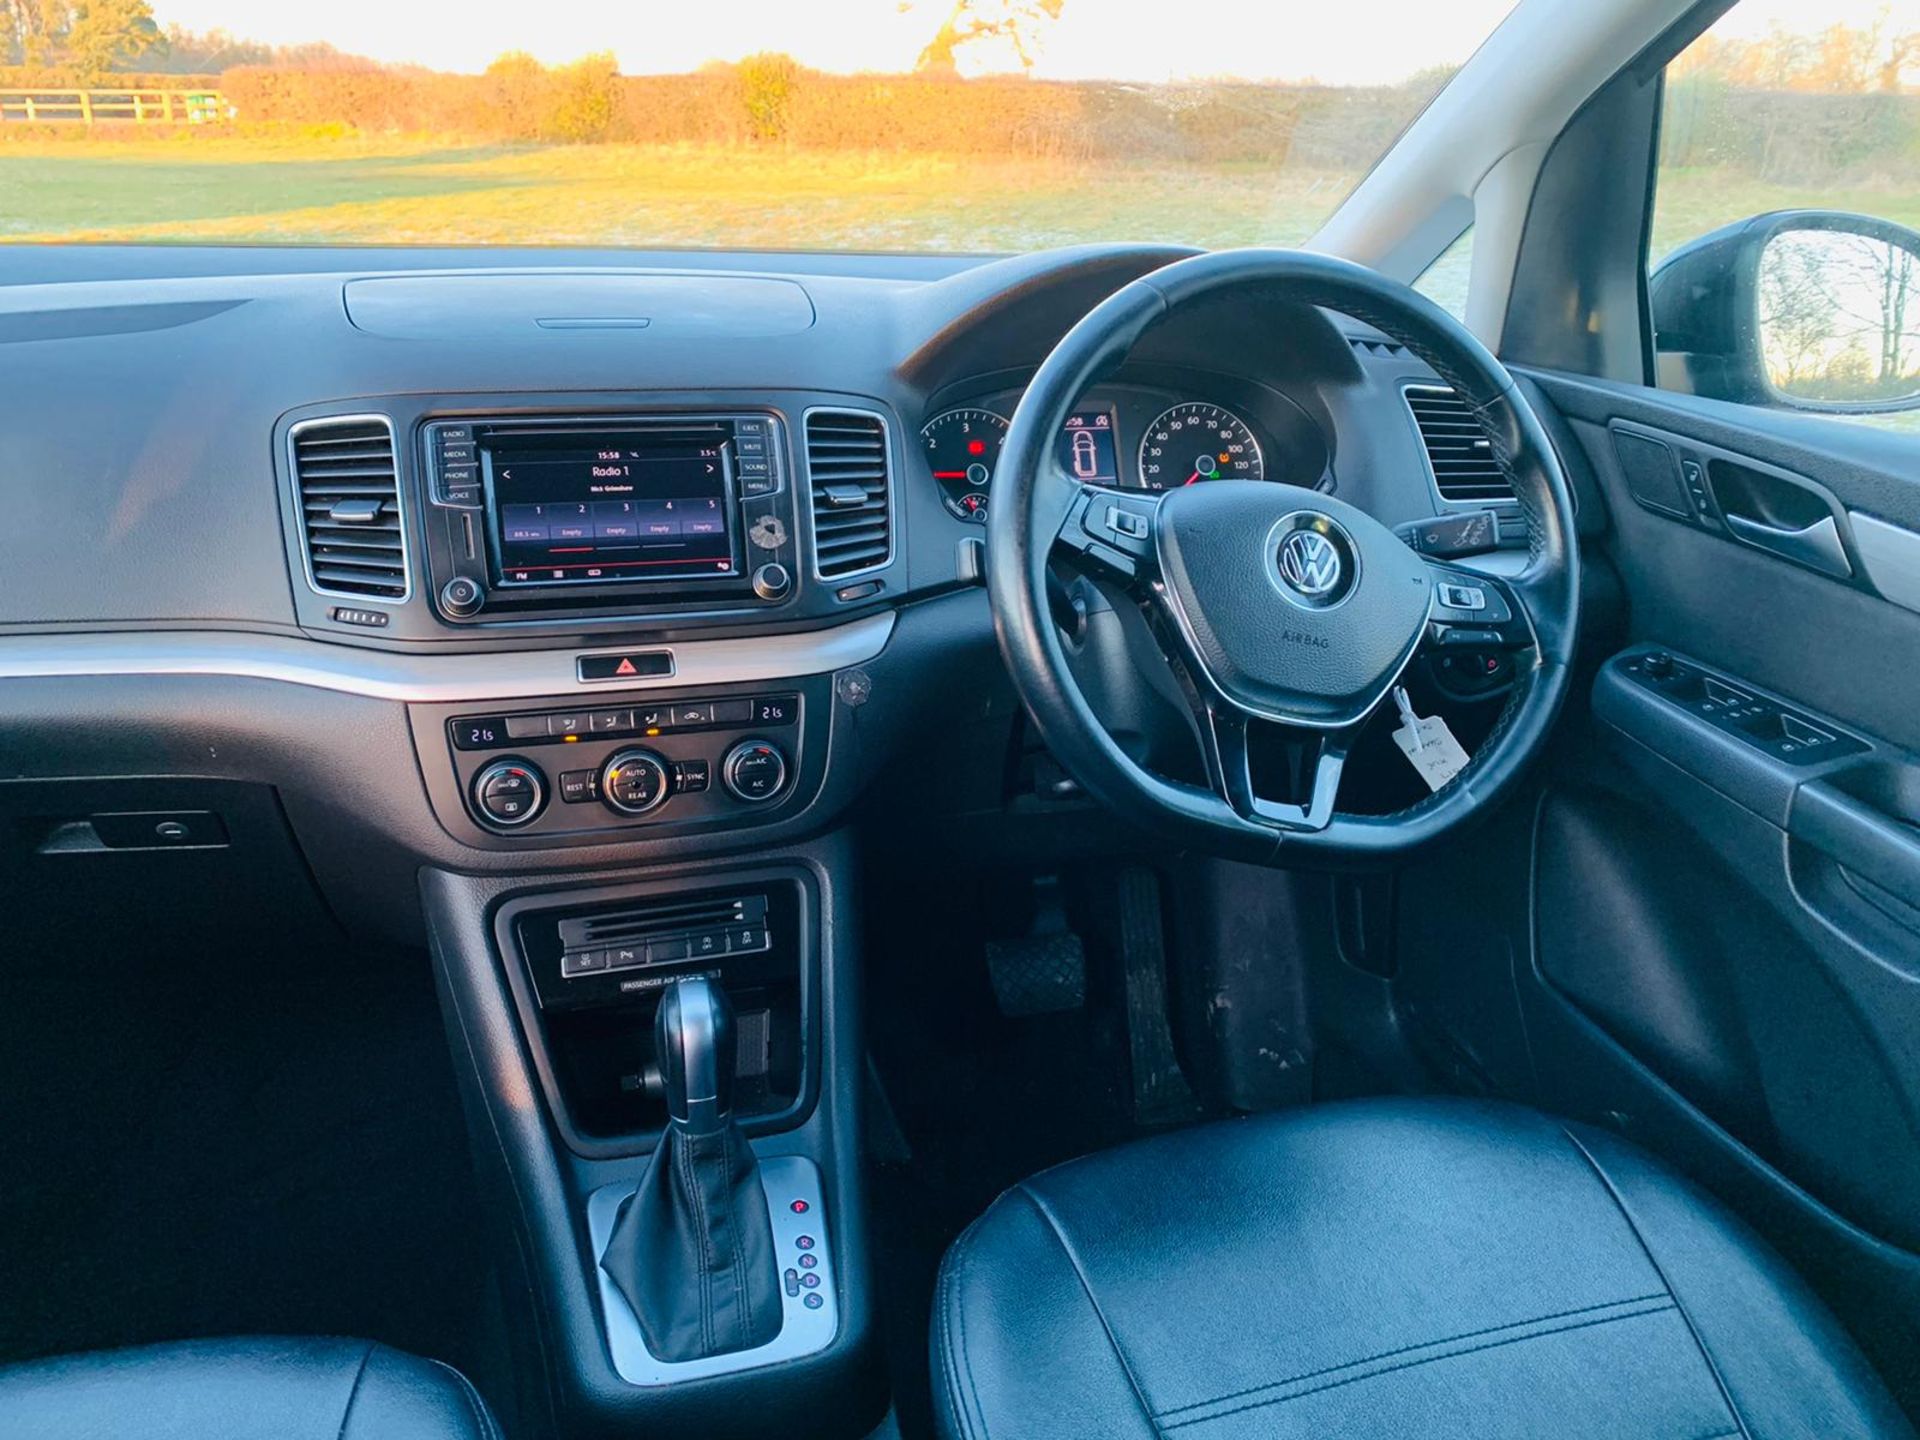 (RESERVE MET) Volkswagen Sharan SE 2.0 TDI Bluemotion (MPV) 7 Seats - 2017 17 Reg - Parking Sensors - Image 9 of 25